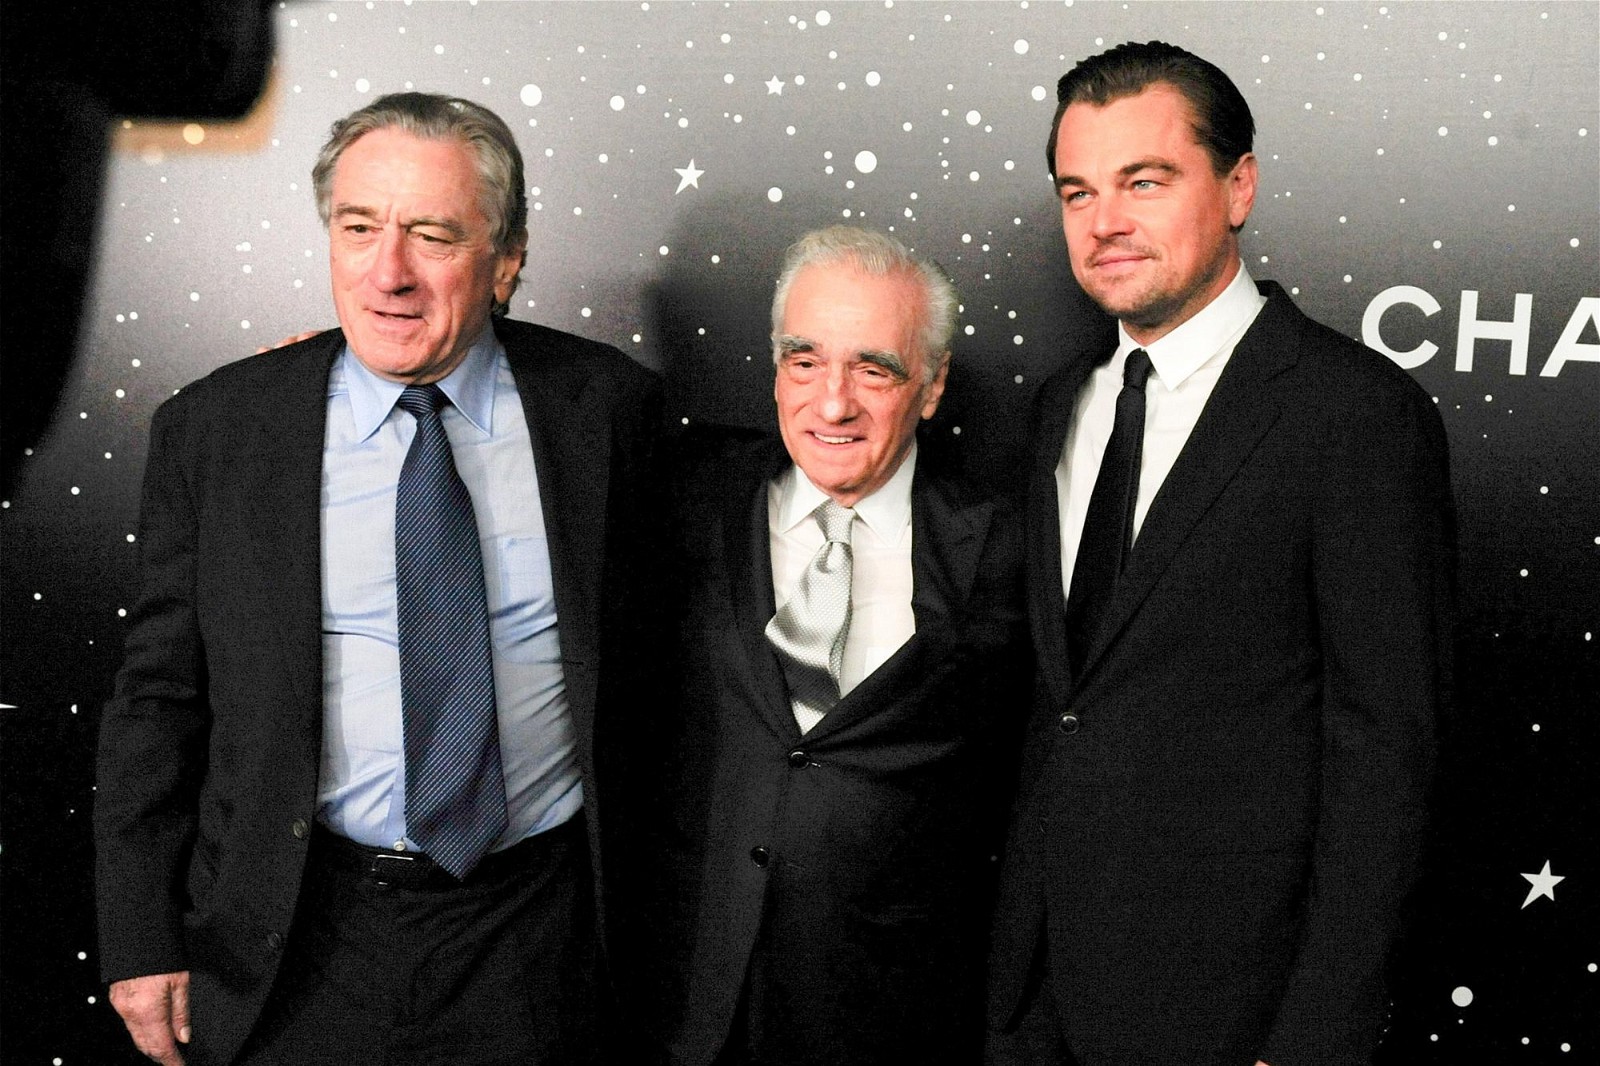 Martin Scorsese with Robert De Niro and Leonardo DiCaprio